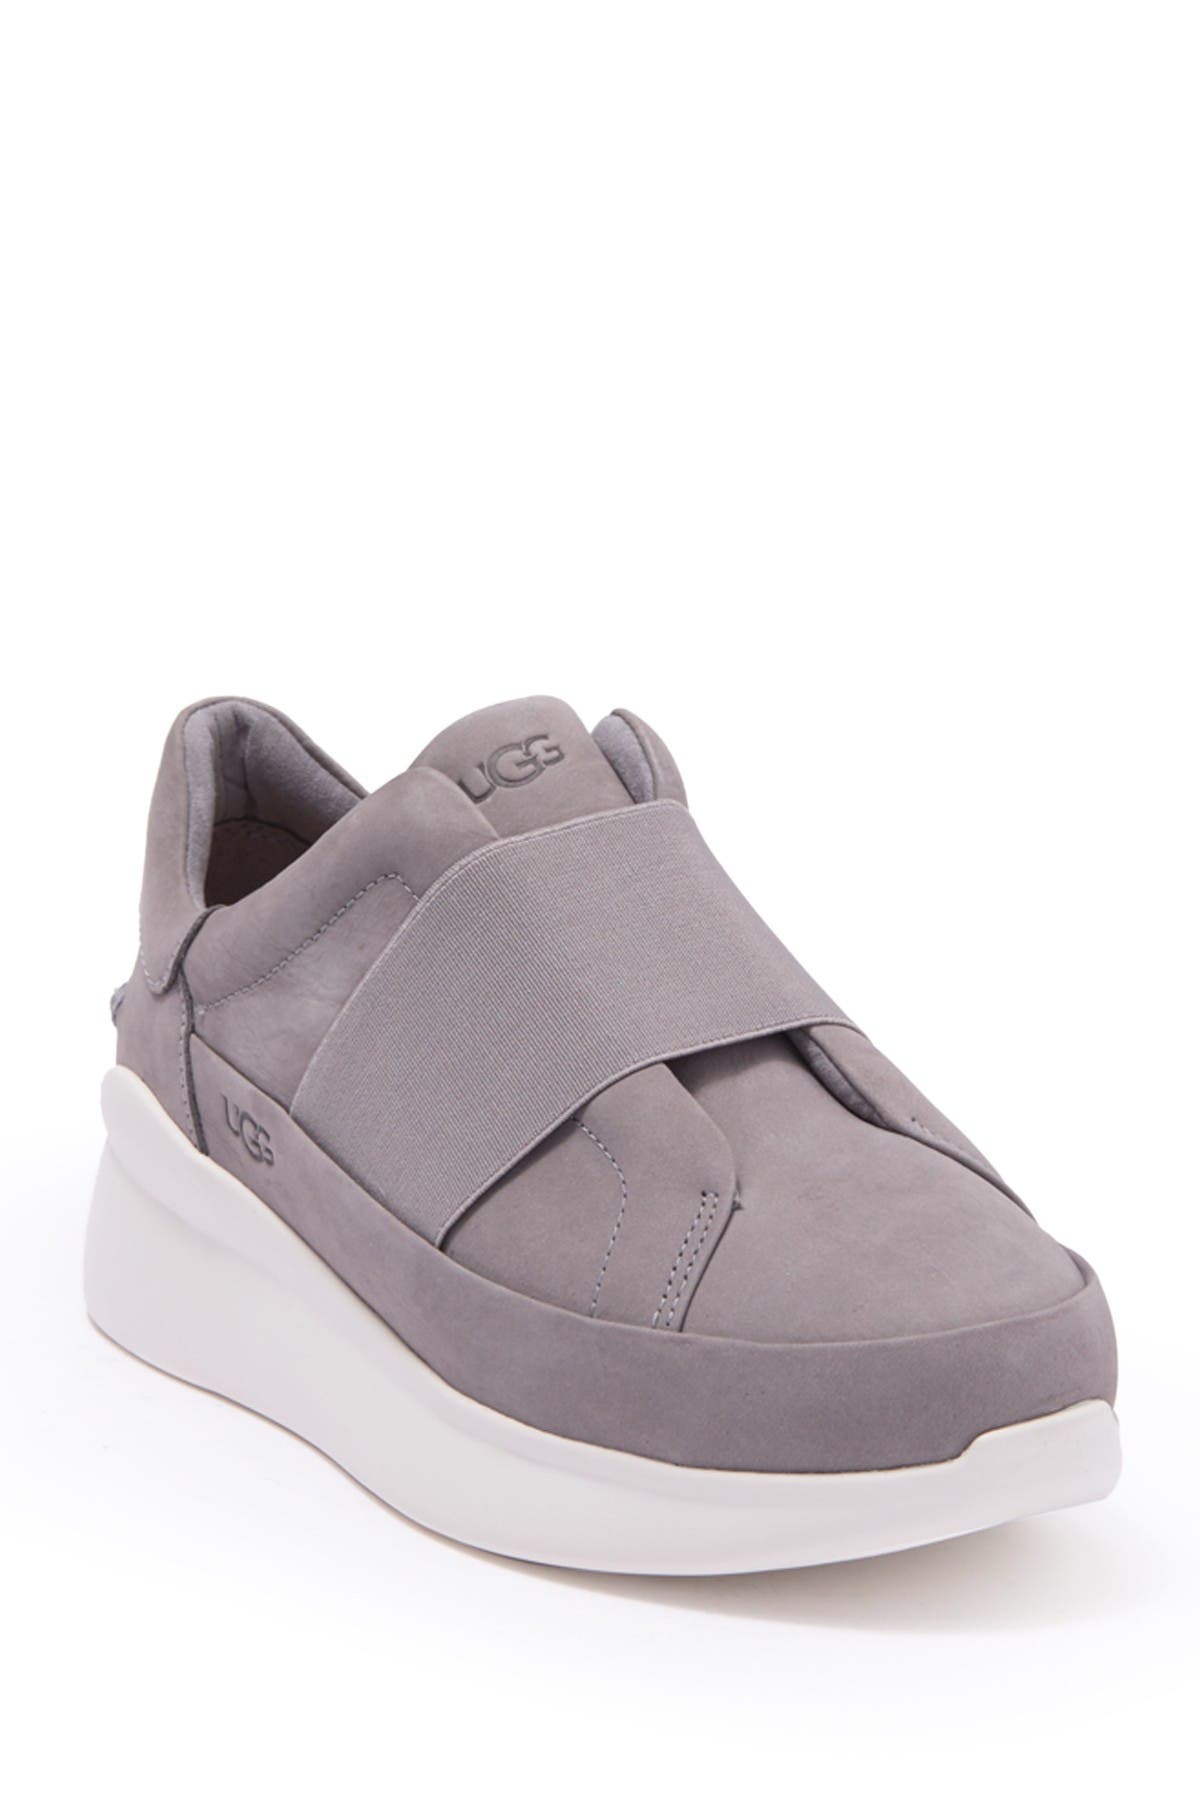 UGG | Libu Slip-On Leather Sneaker 